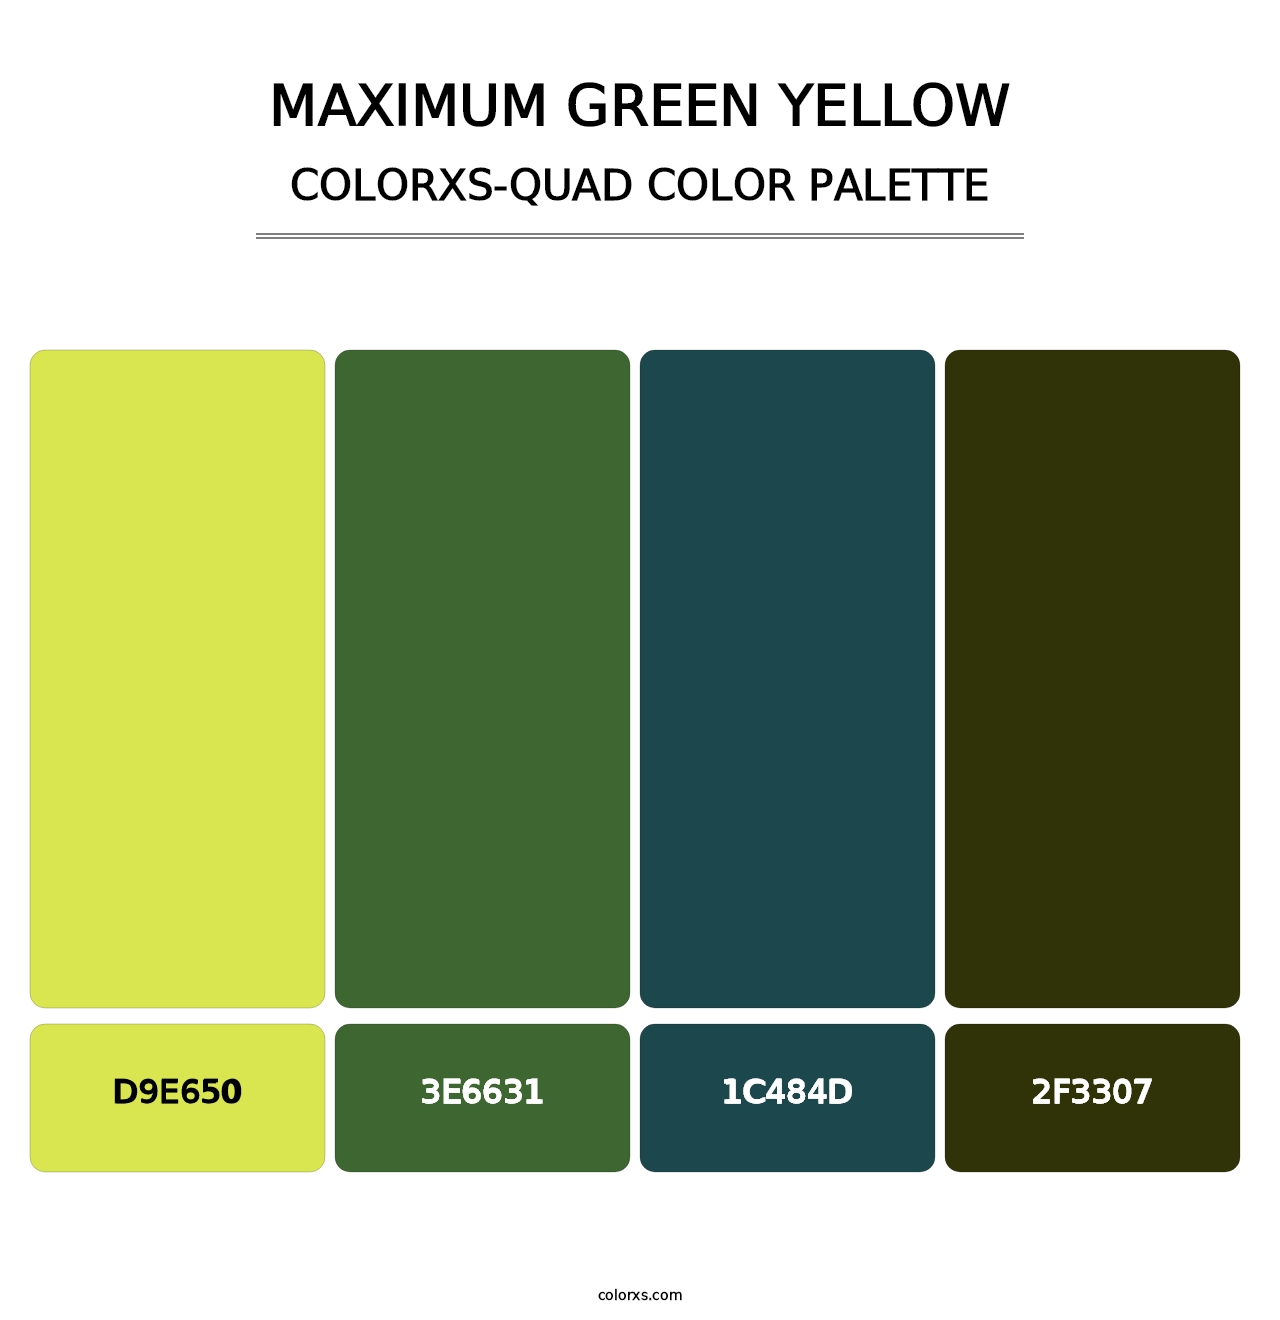 Maximum Green Yellow - Colorxs Quad Palette